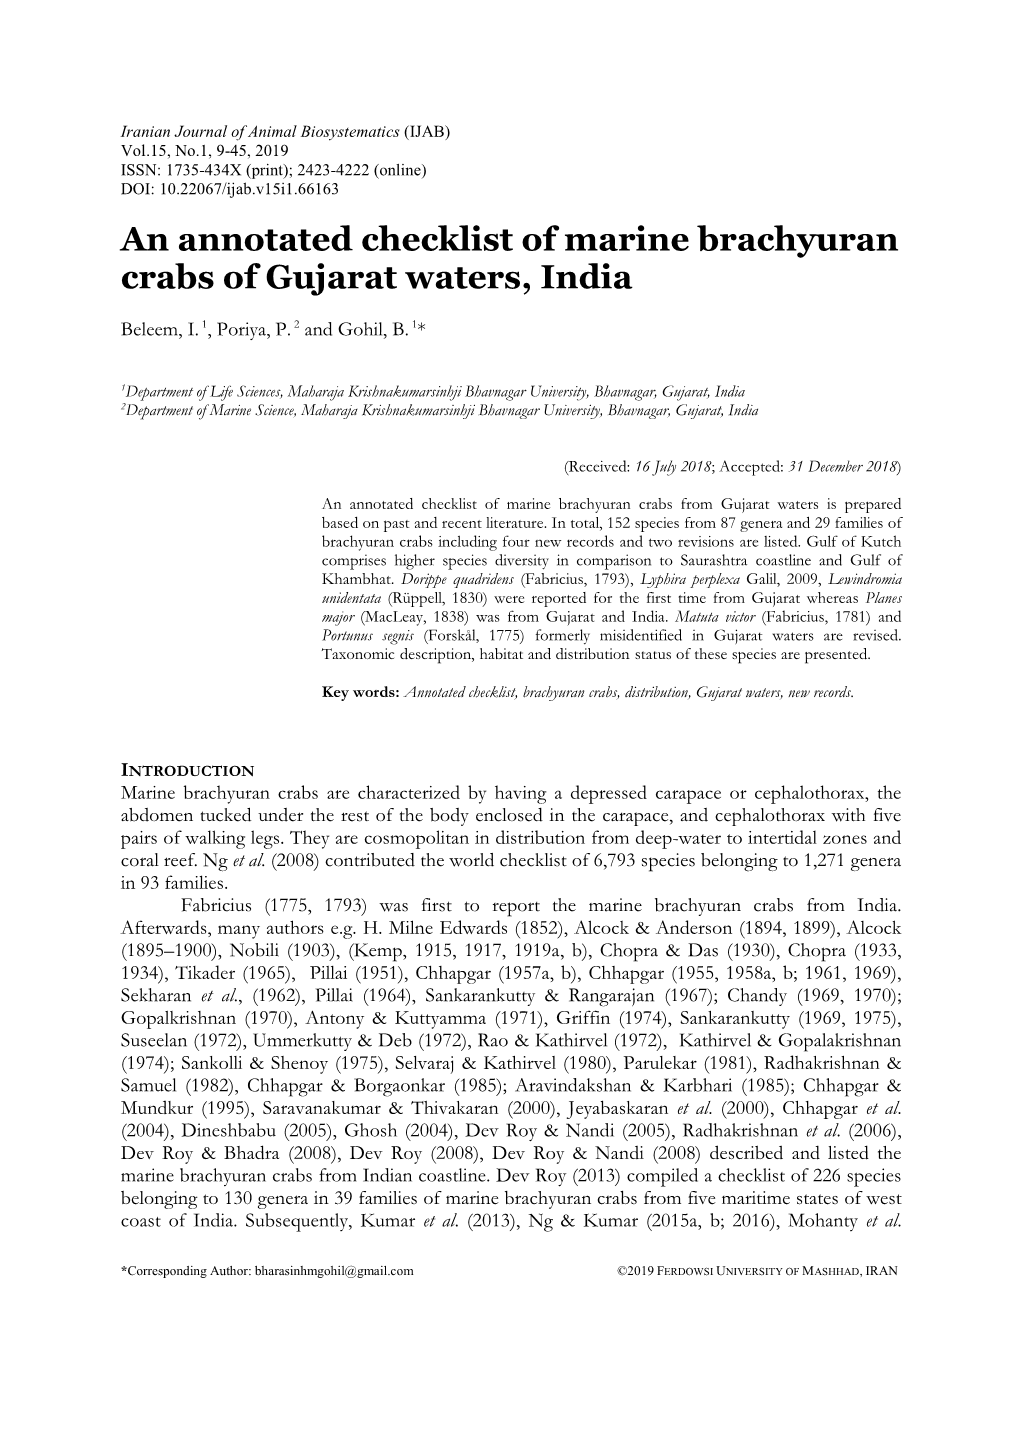 An Annotated Checklist of Marine Brachyuran Crabs of Gujarat Waters, India